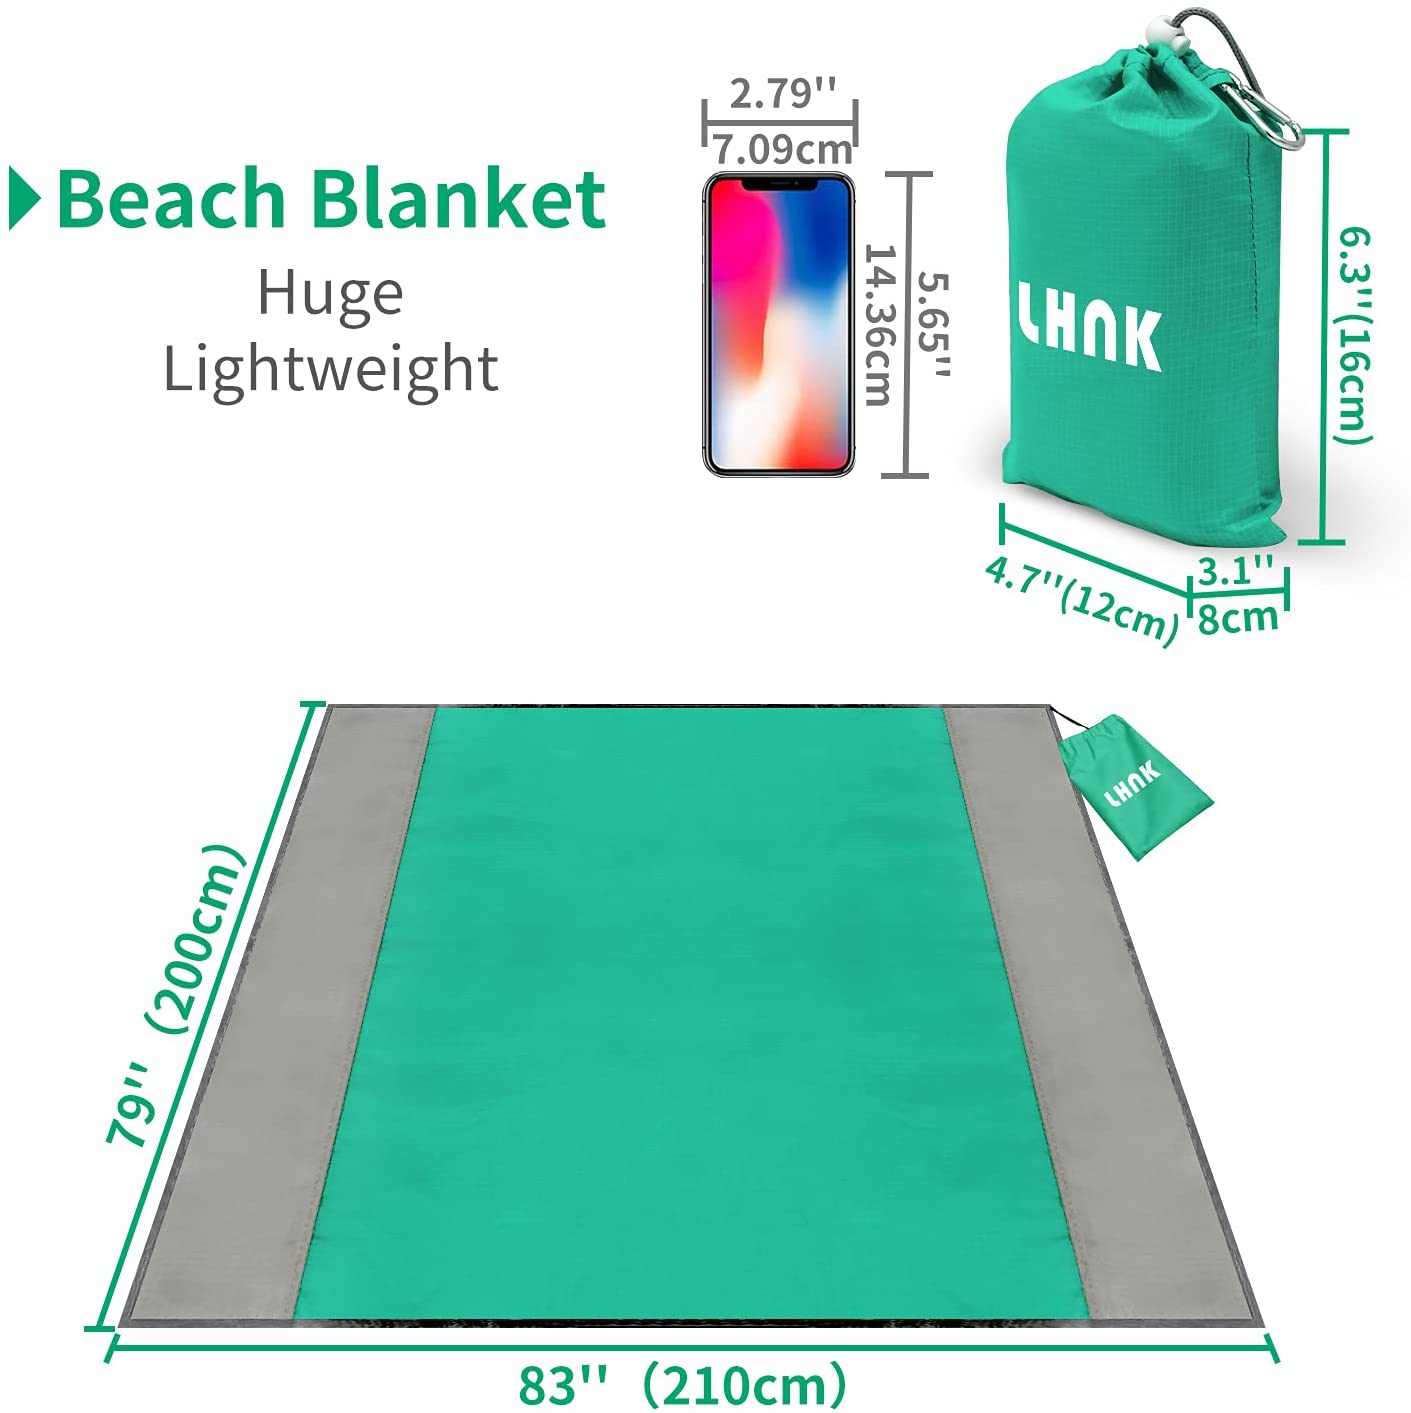 Sandproof Beach Blanket $9.49 Free Shipping